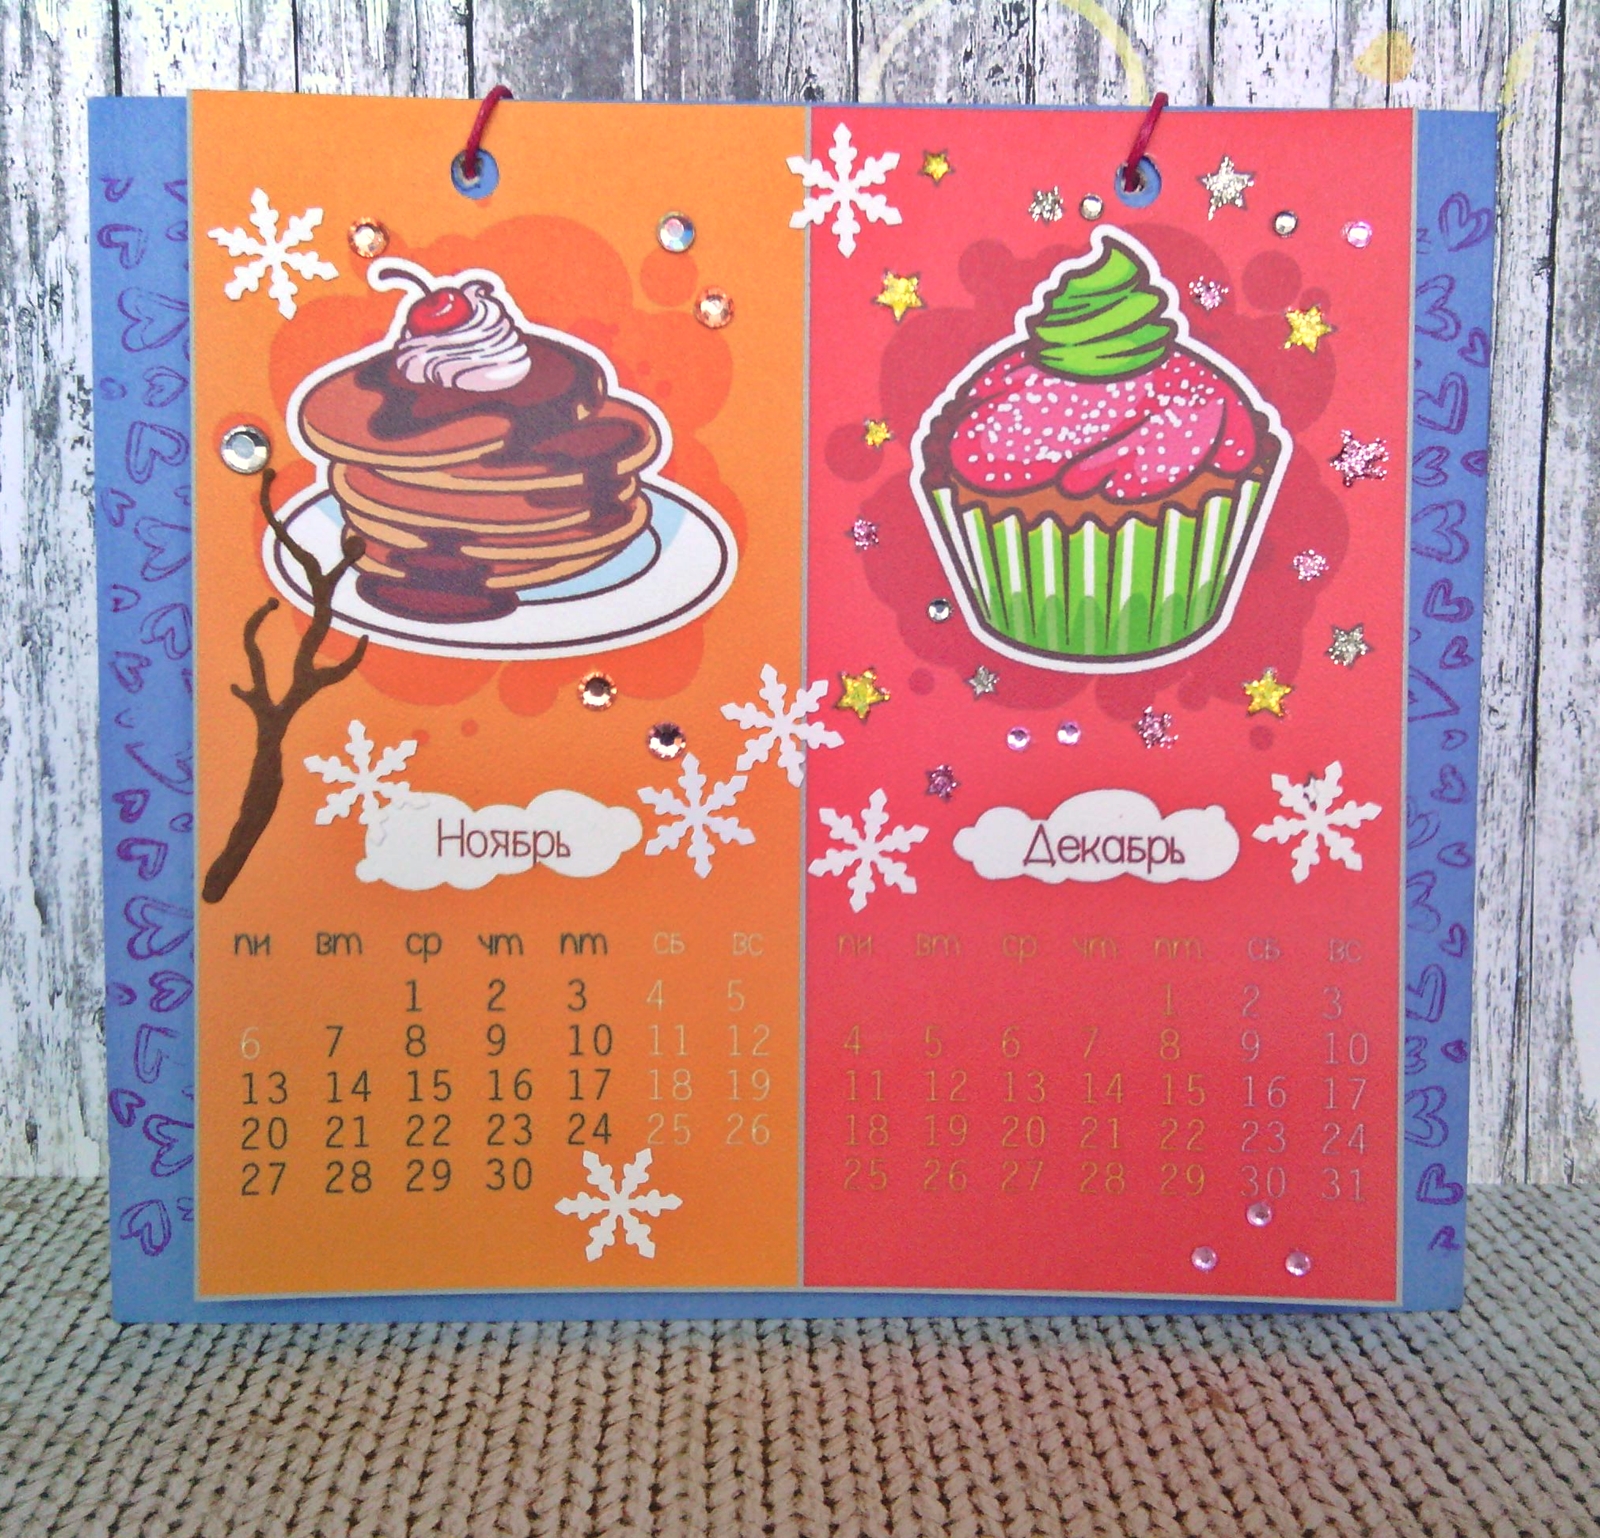 Сладкий календарь. Календарь со сладостями. Календарь сладкий сладкий. Самый сладкий календарь.